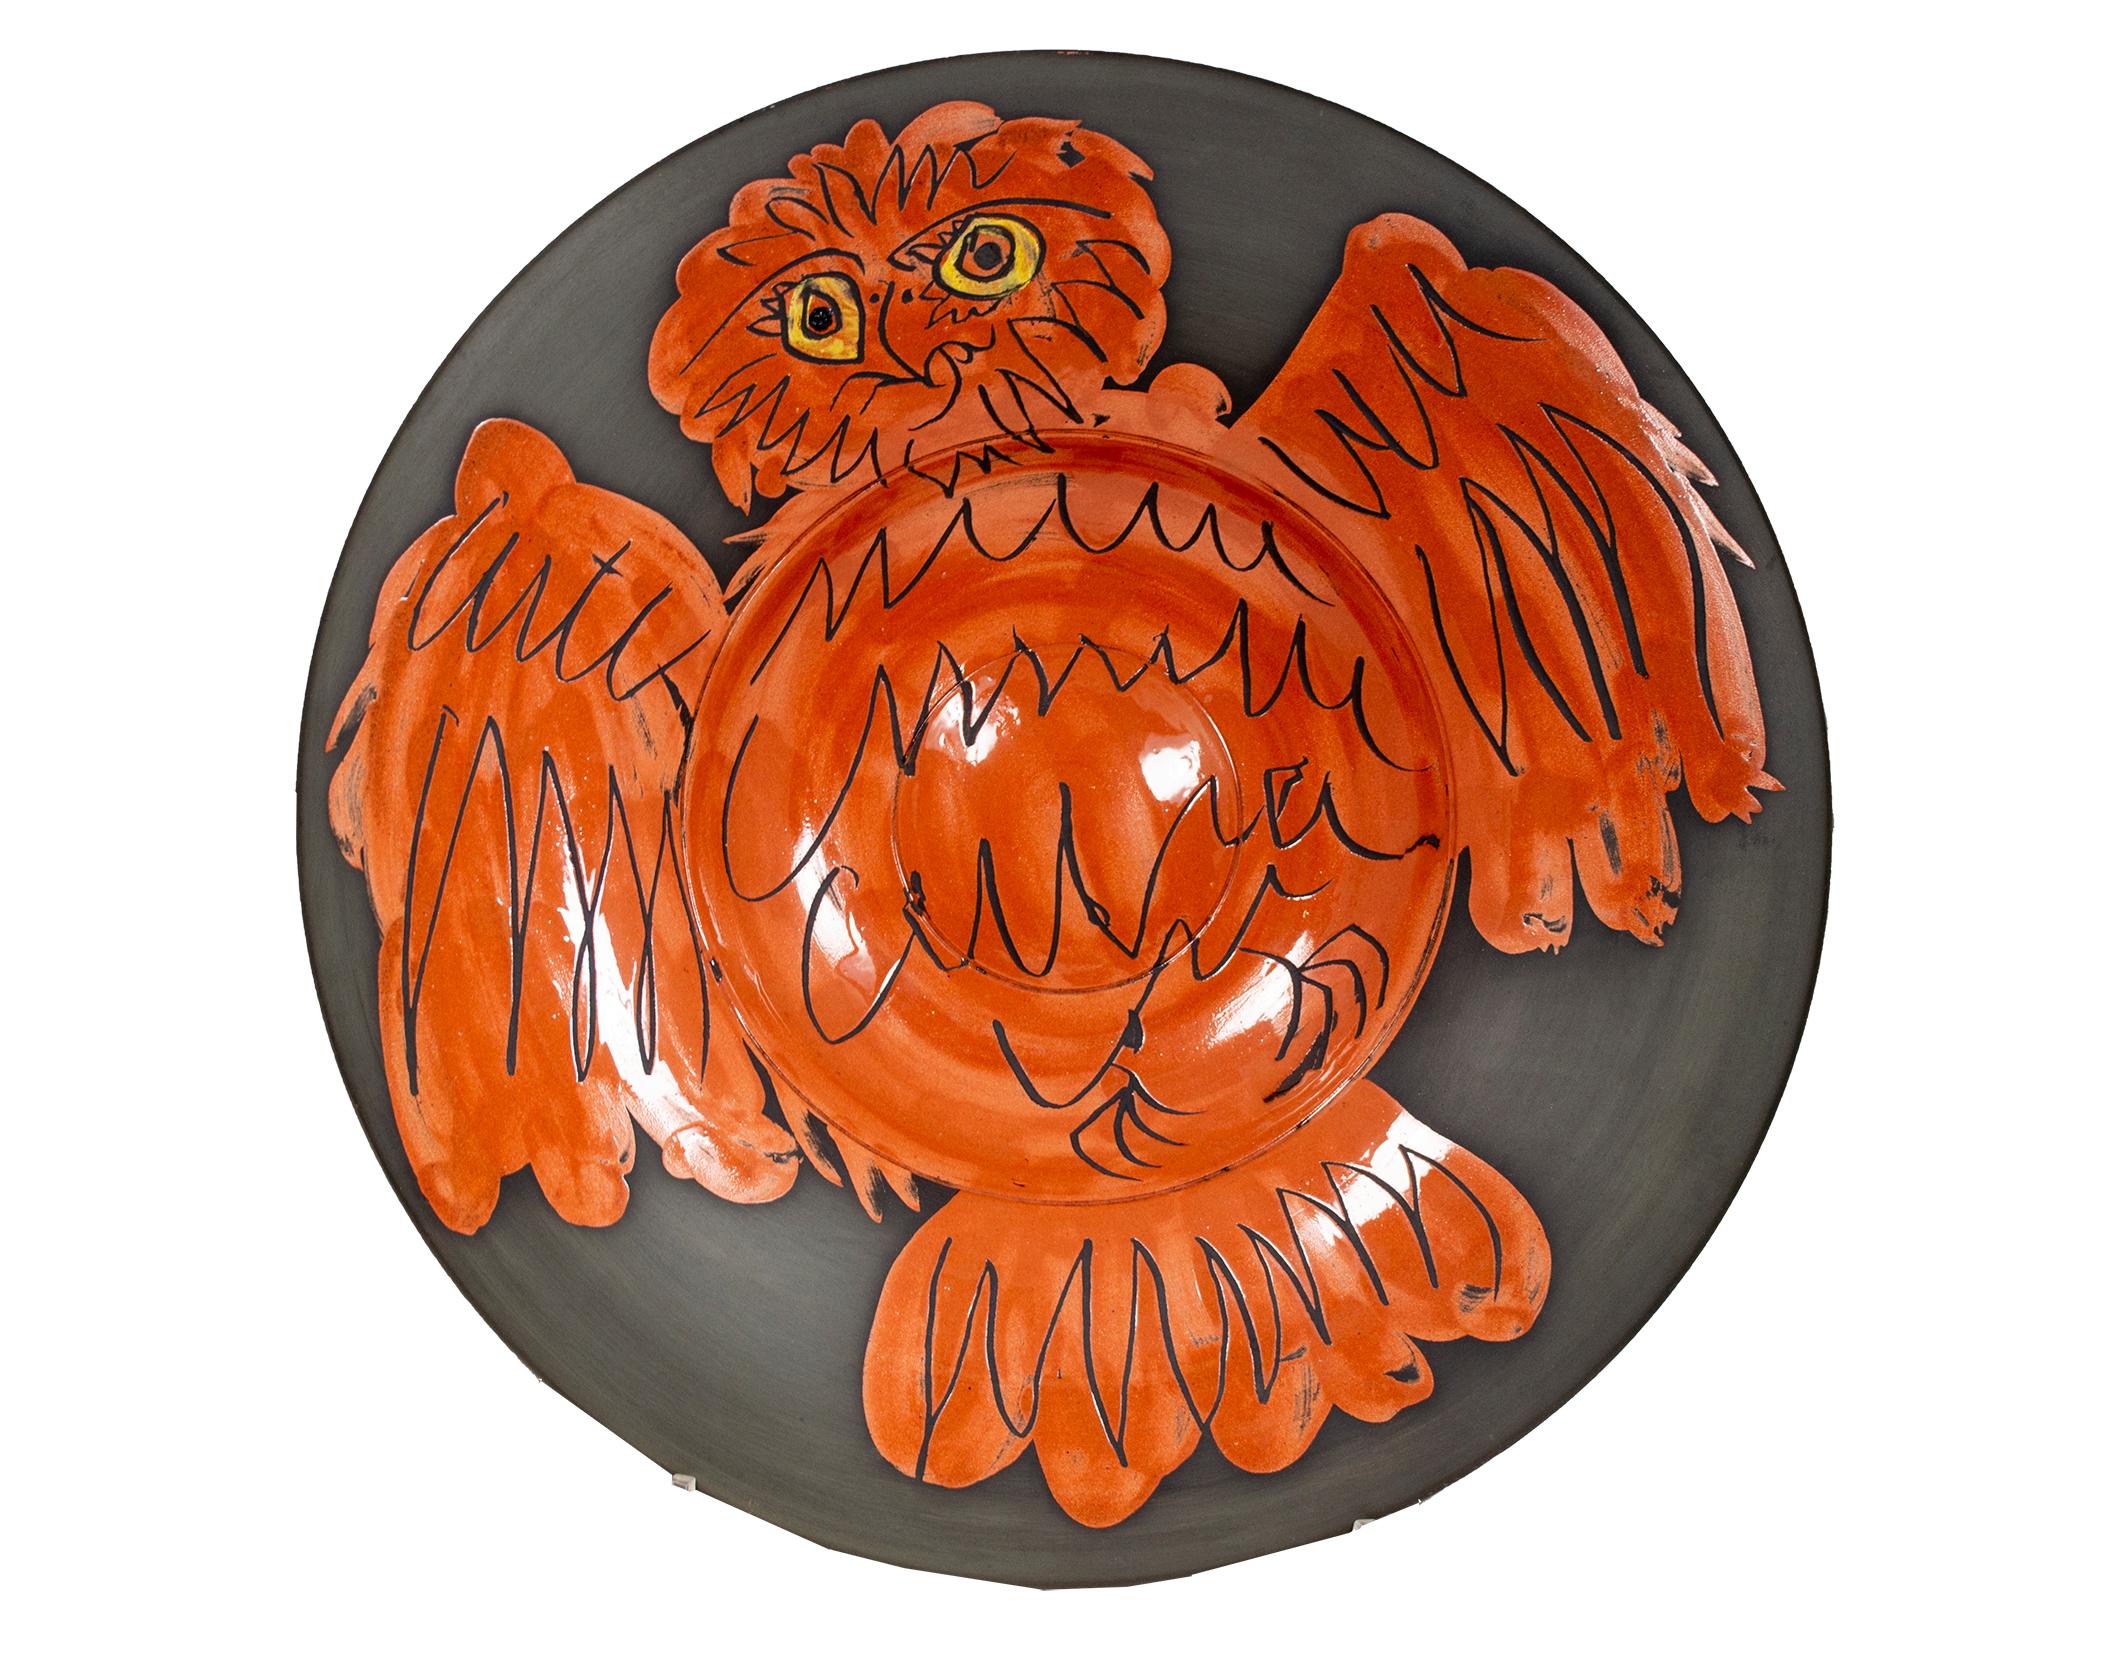 Pablo Picasso Animal Print - Hibou rouge sur fond noir (Red Owl on Black Ground) original Picasso ceramic